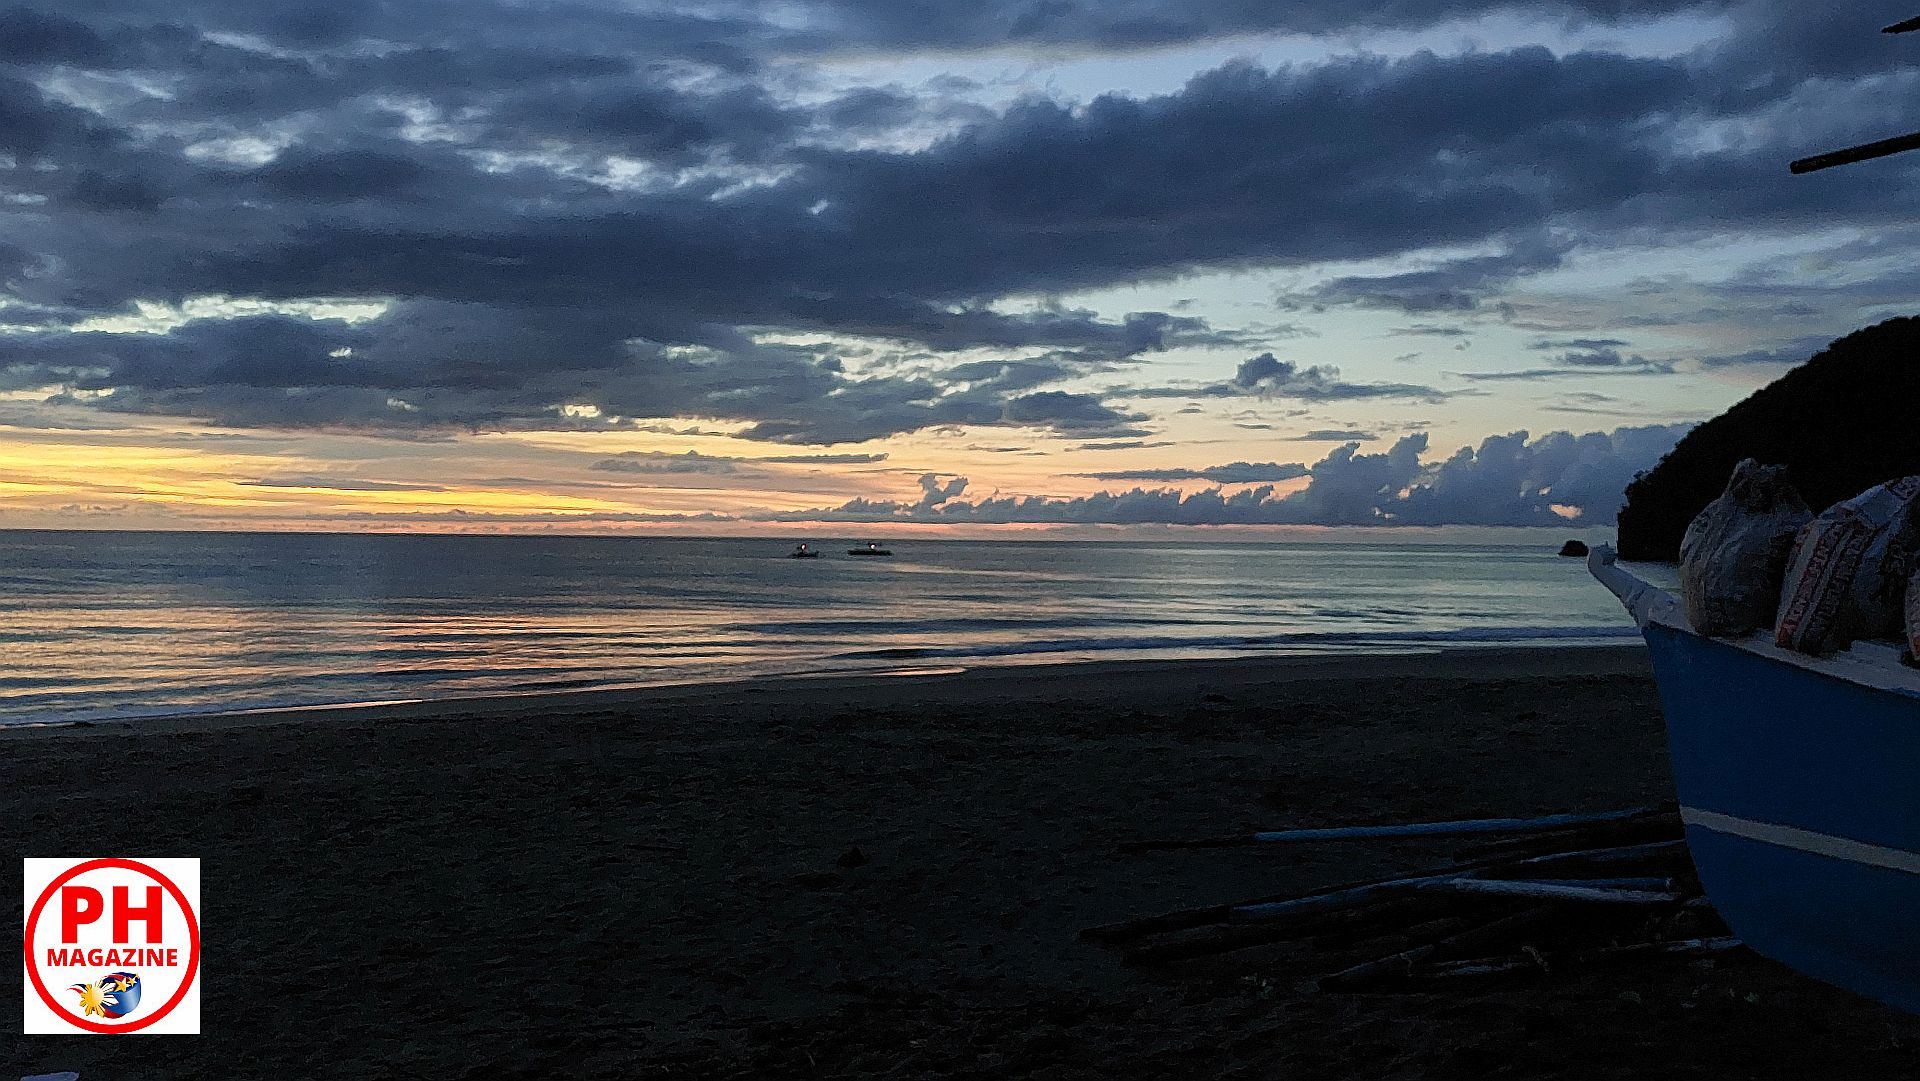 Meine Fotoserie. Fotografische Experimente am Strand bei Sonnenuntergang